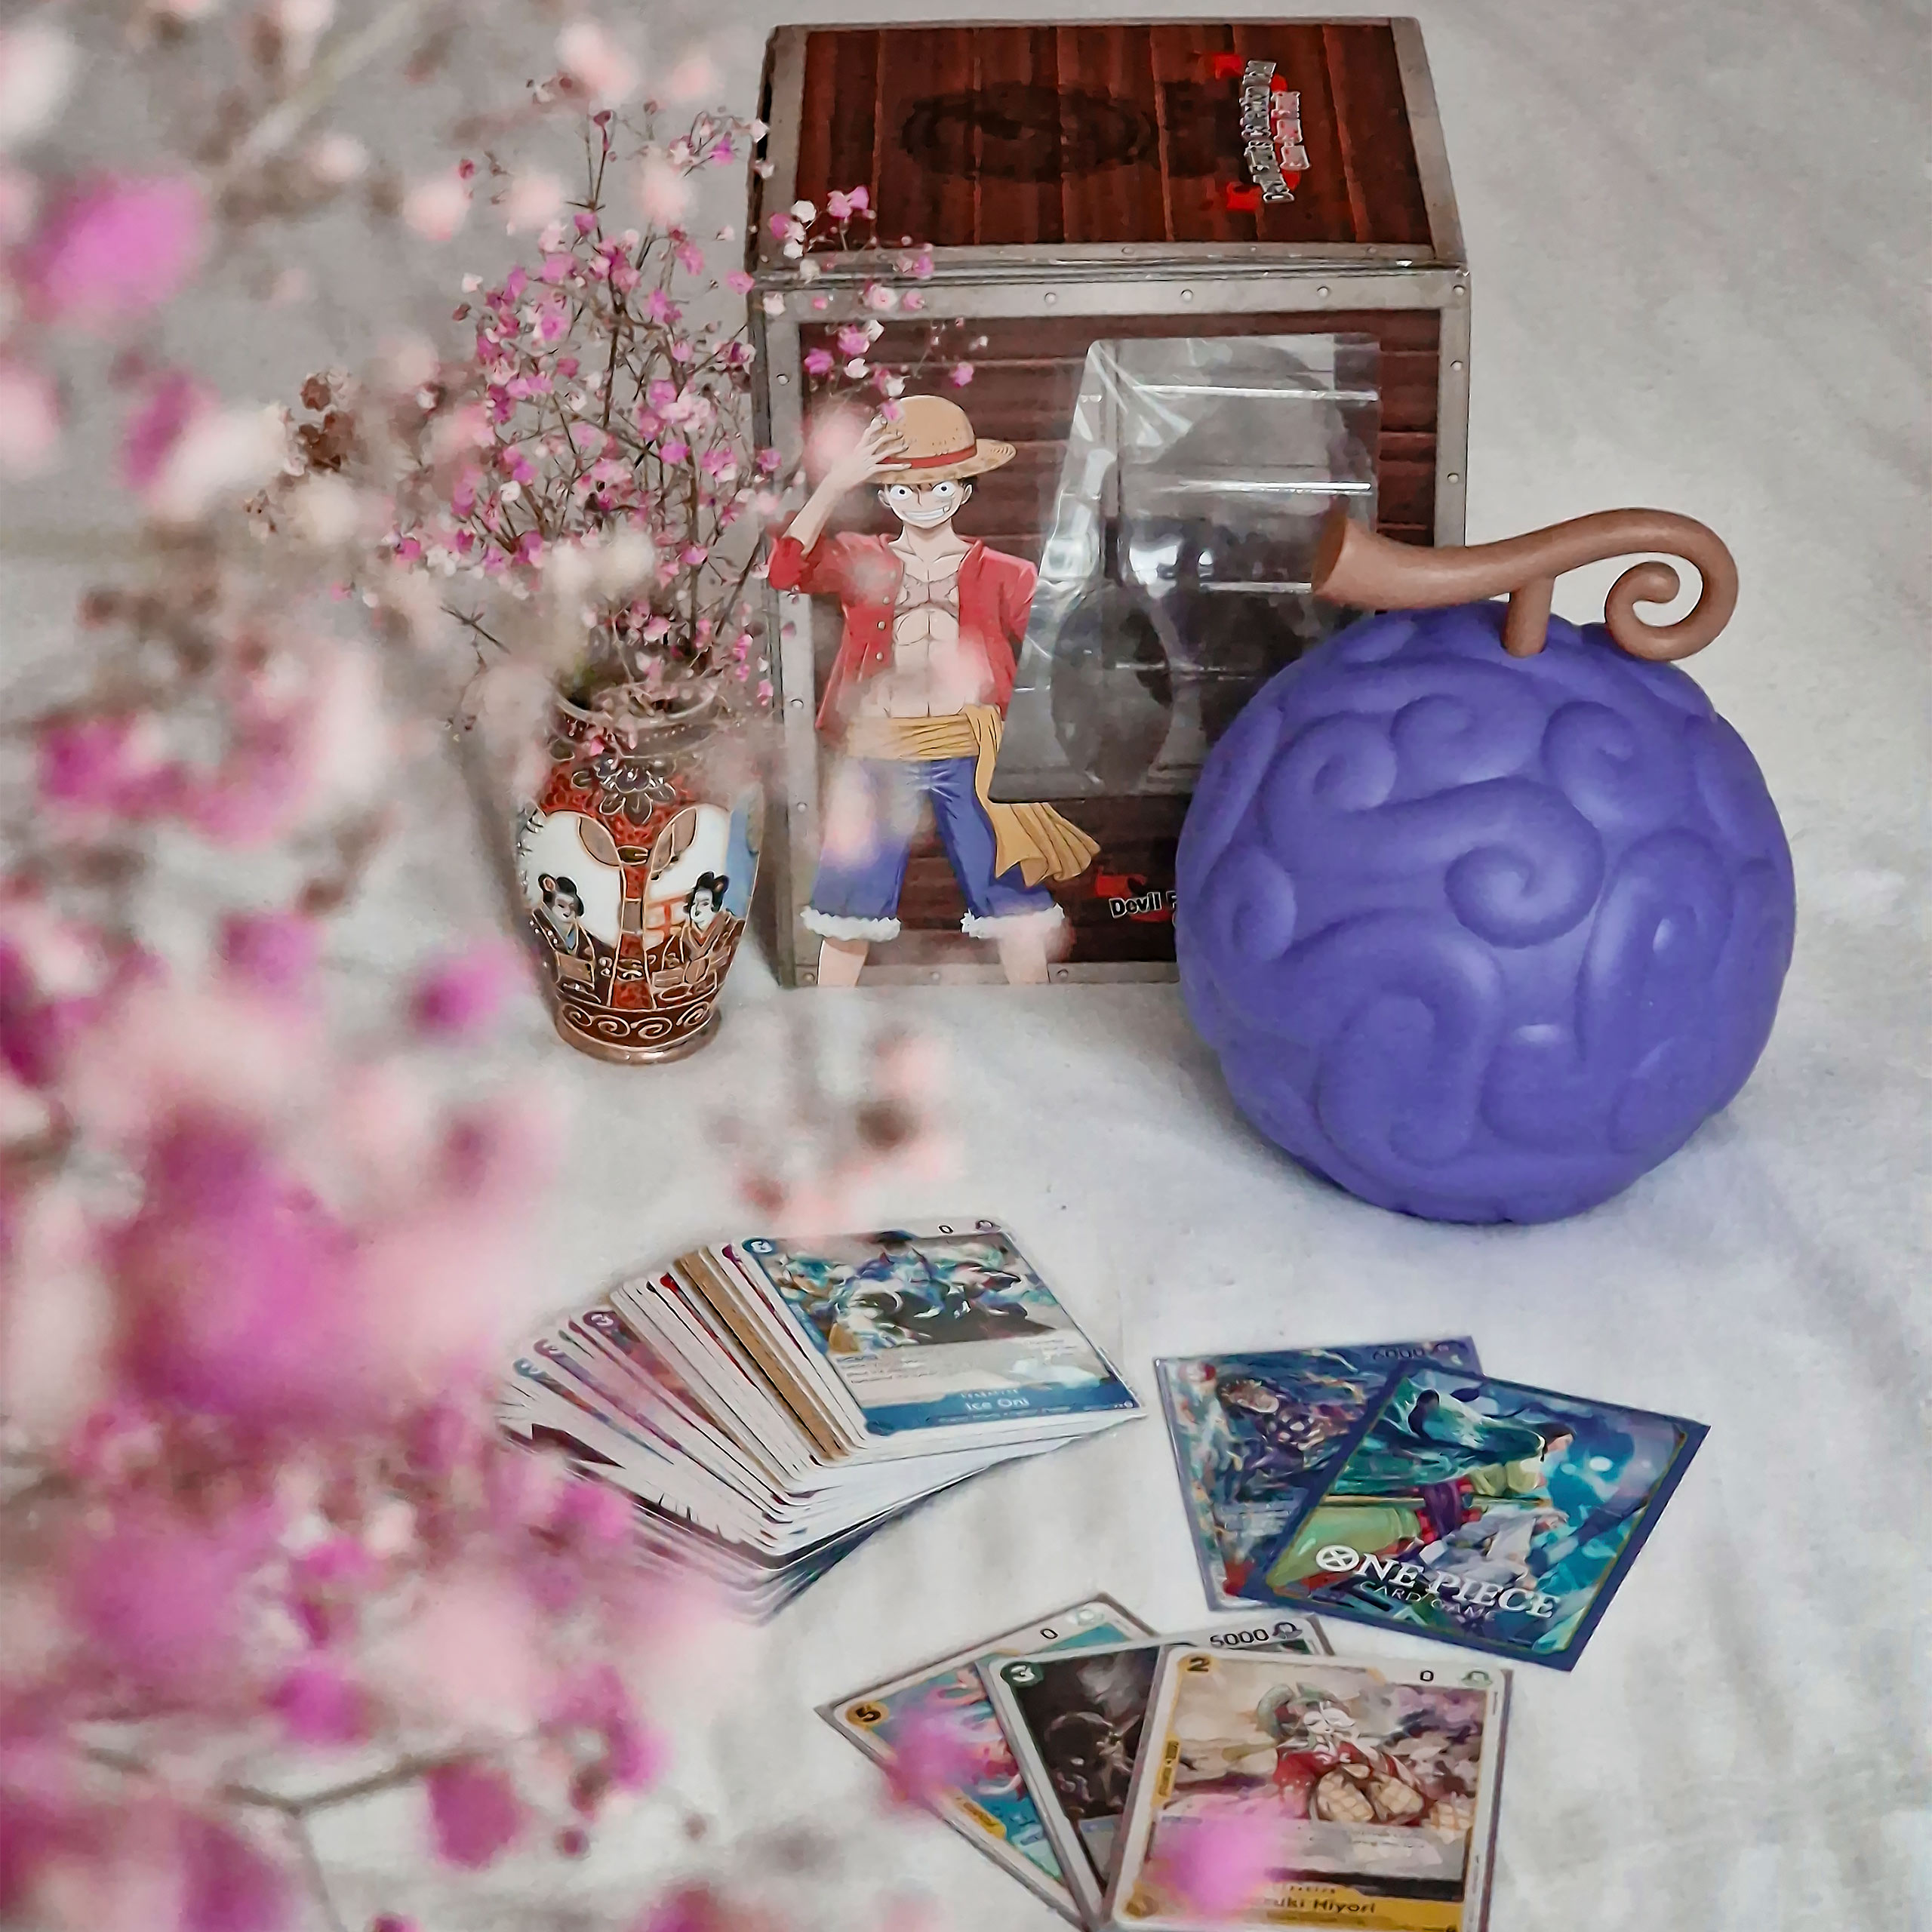 One Piece Card Game - Gomu Gomu Devil Fruit Verzamelkaarten Box